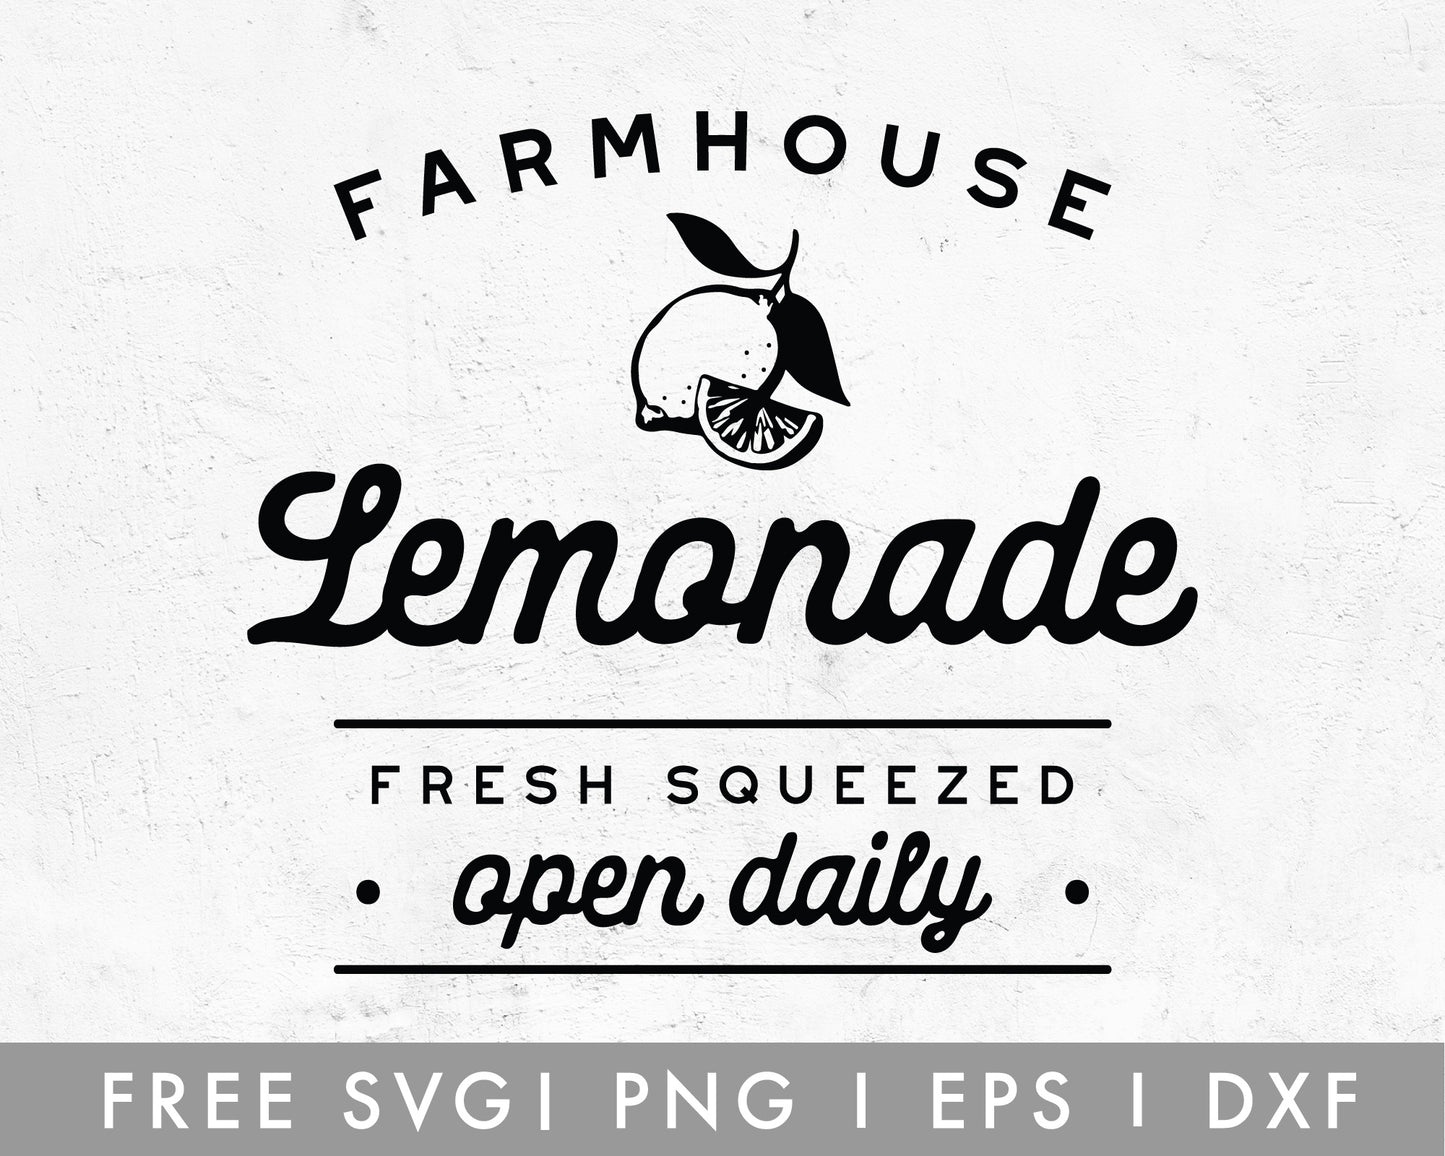 FREE Farmhouse Lemonade Sign SVG Cut File for Cricut, Cameo Silhouette | Free SVG Cut File